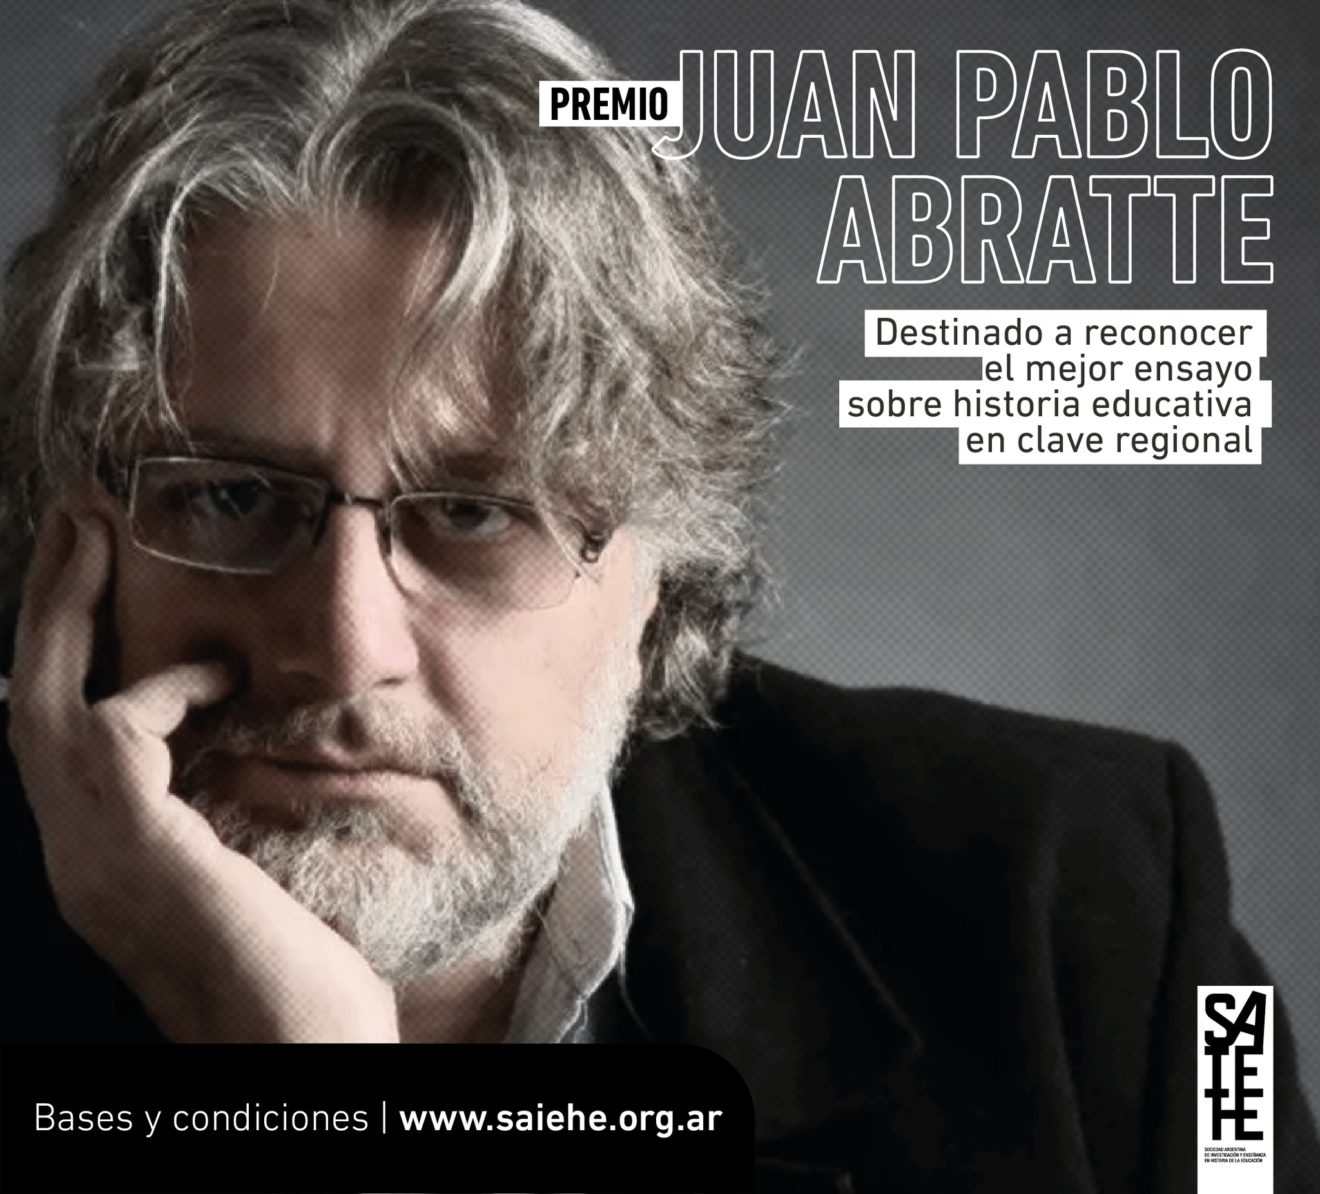 La SAIEHE lanzó la convocatoria al Premio Juan Pablo Abratte